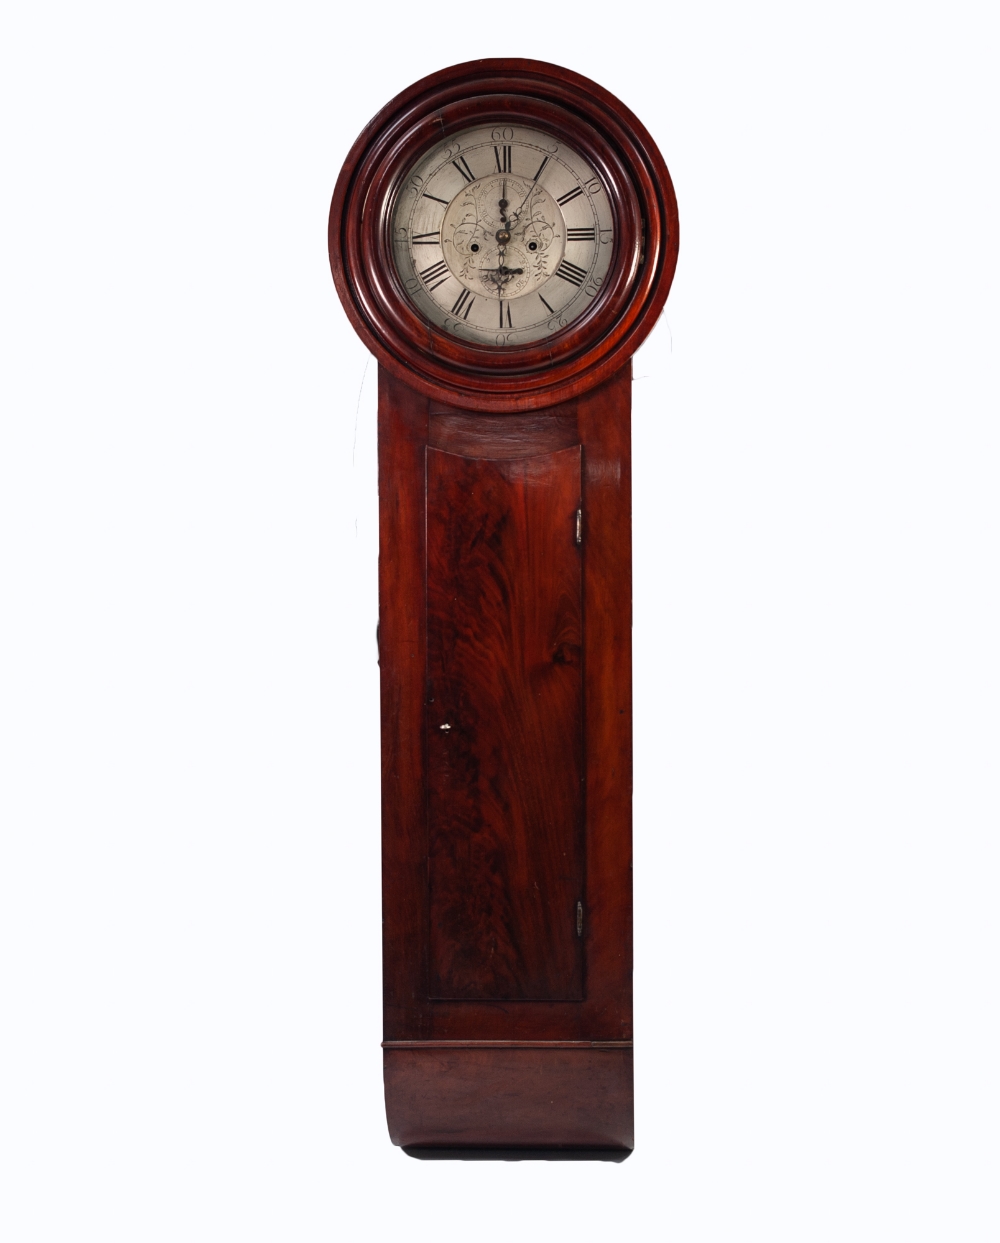 INTERESTING EARLY NINETEENTH CENTURY FIGURED MAHOGANY LONGCASED WALL CLOCK, the 12" silvered dial